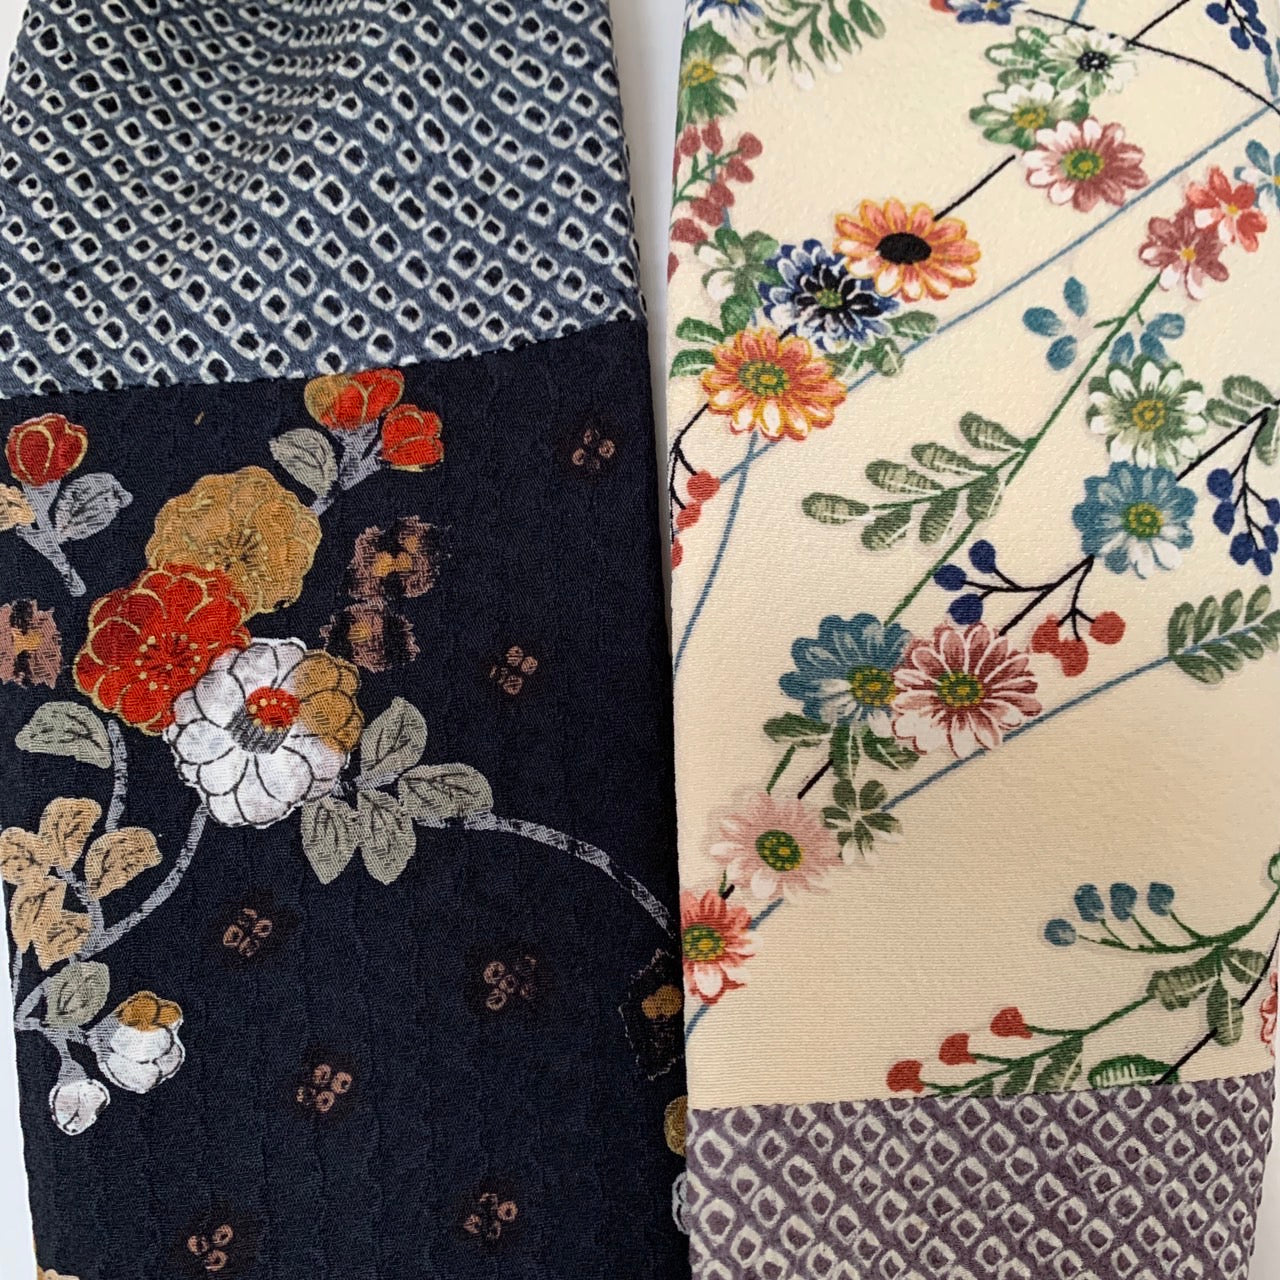 Infinity silk Kimono scarf, Handcrafted, Upcycled, #2040